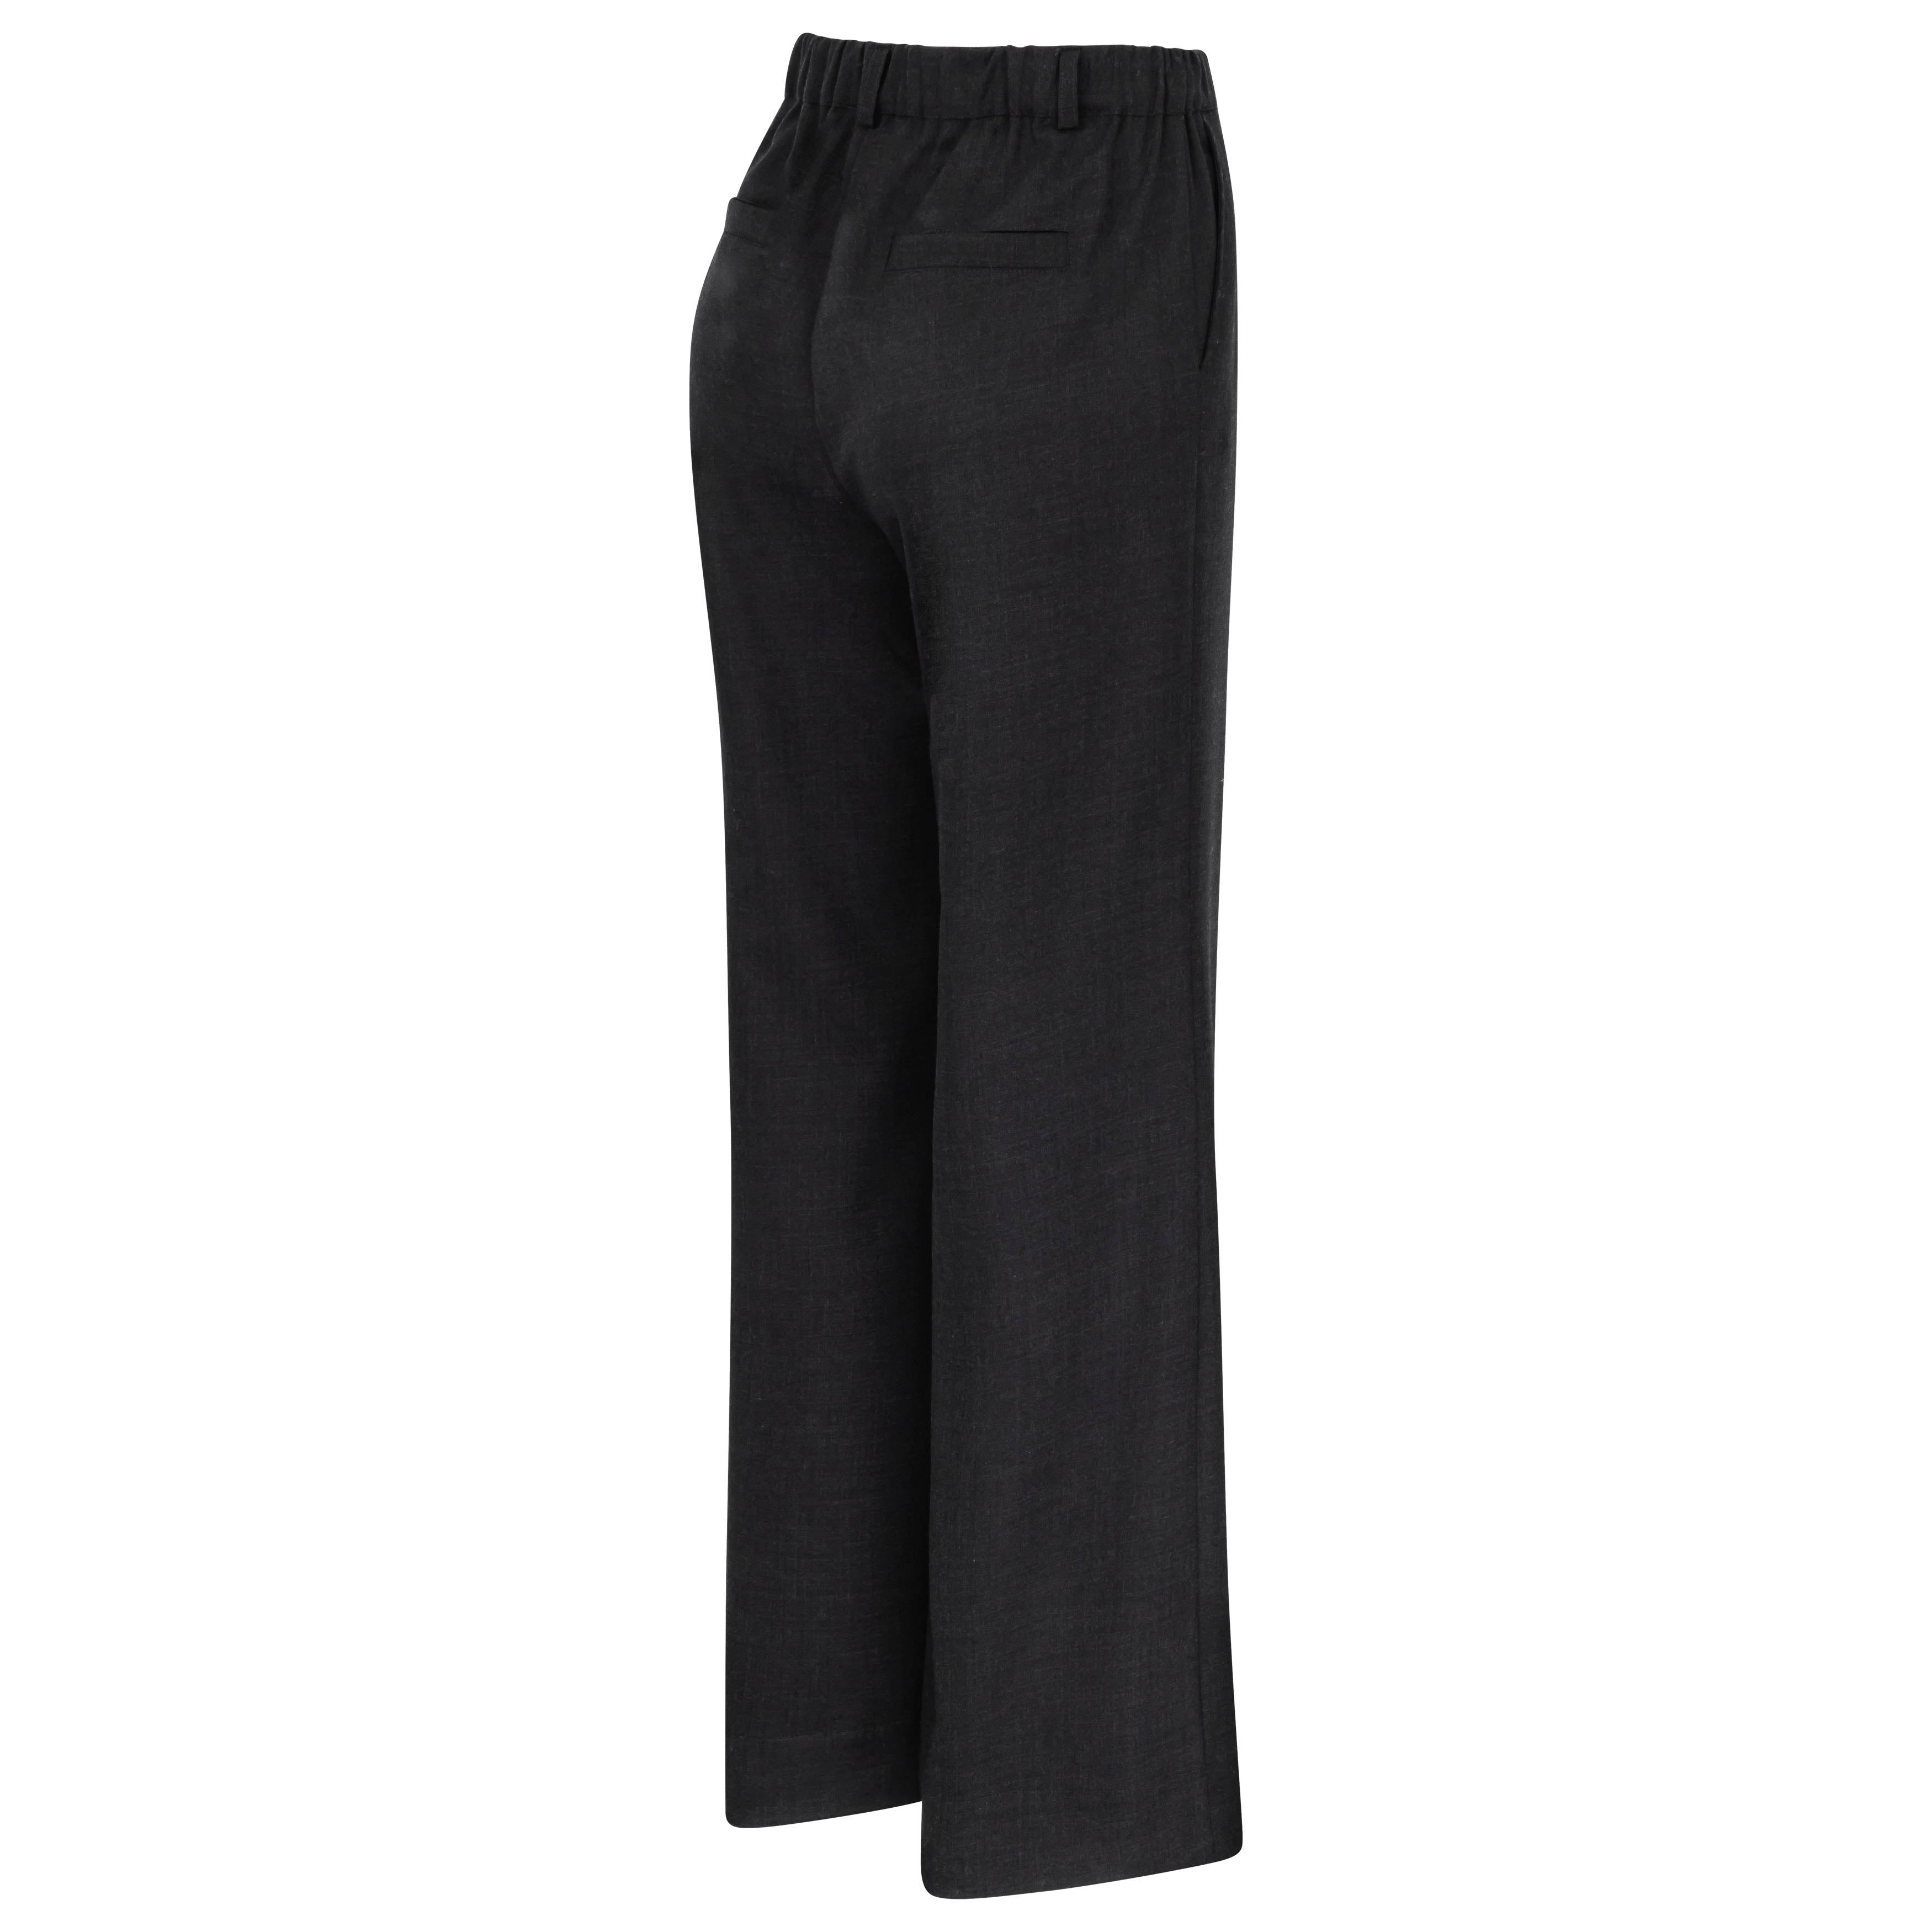 Flannel trousers - dark grey